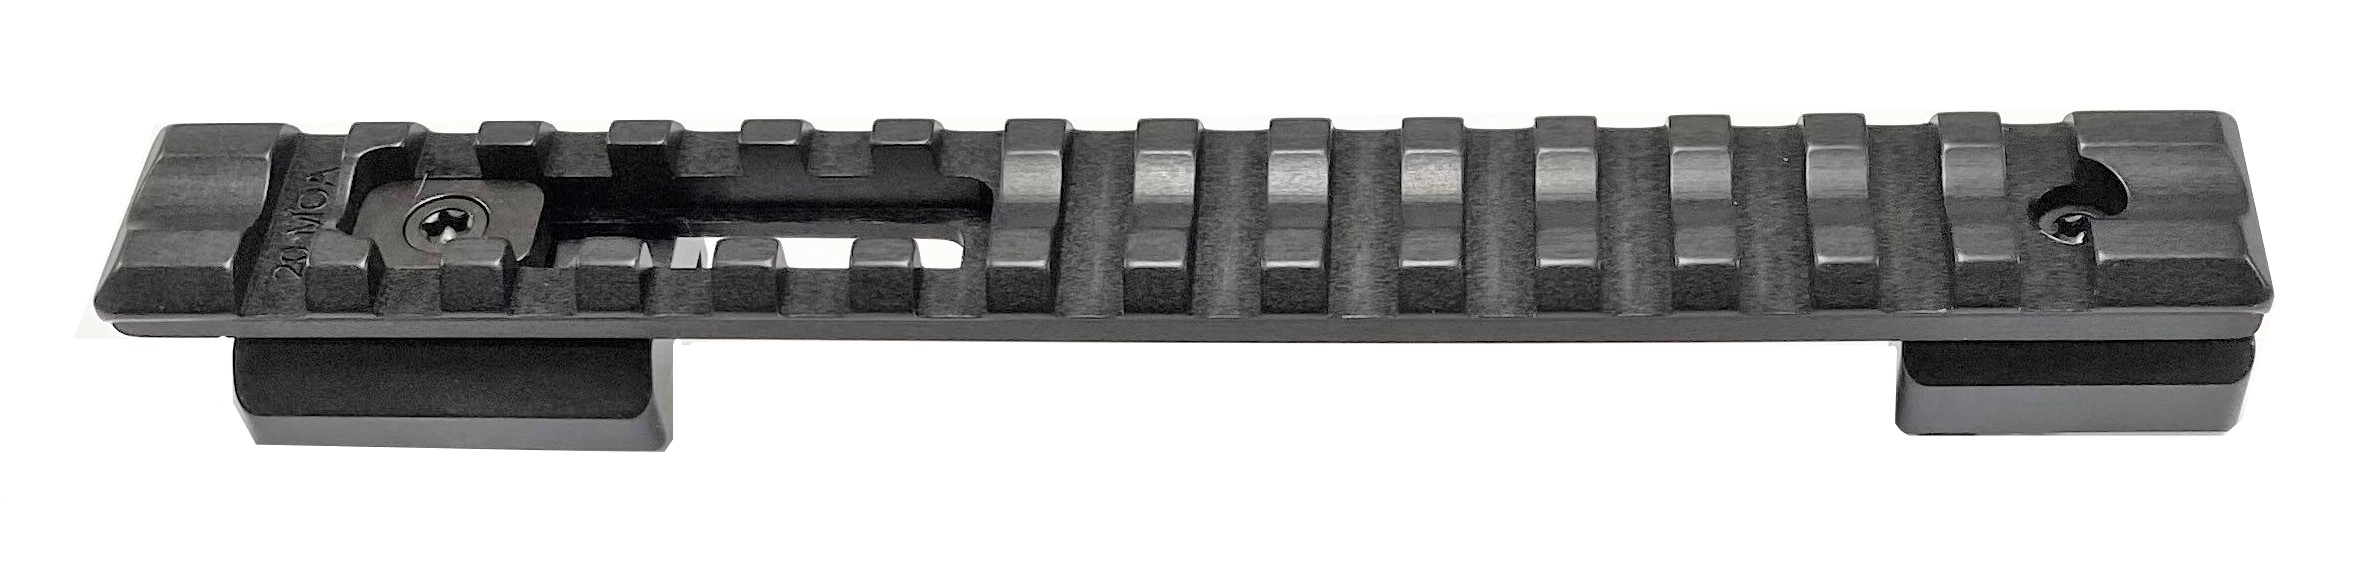 Recknagel Picatinny Rail for SAKO Rifles